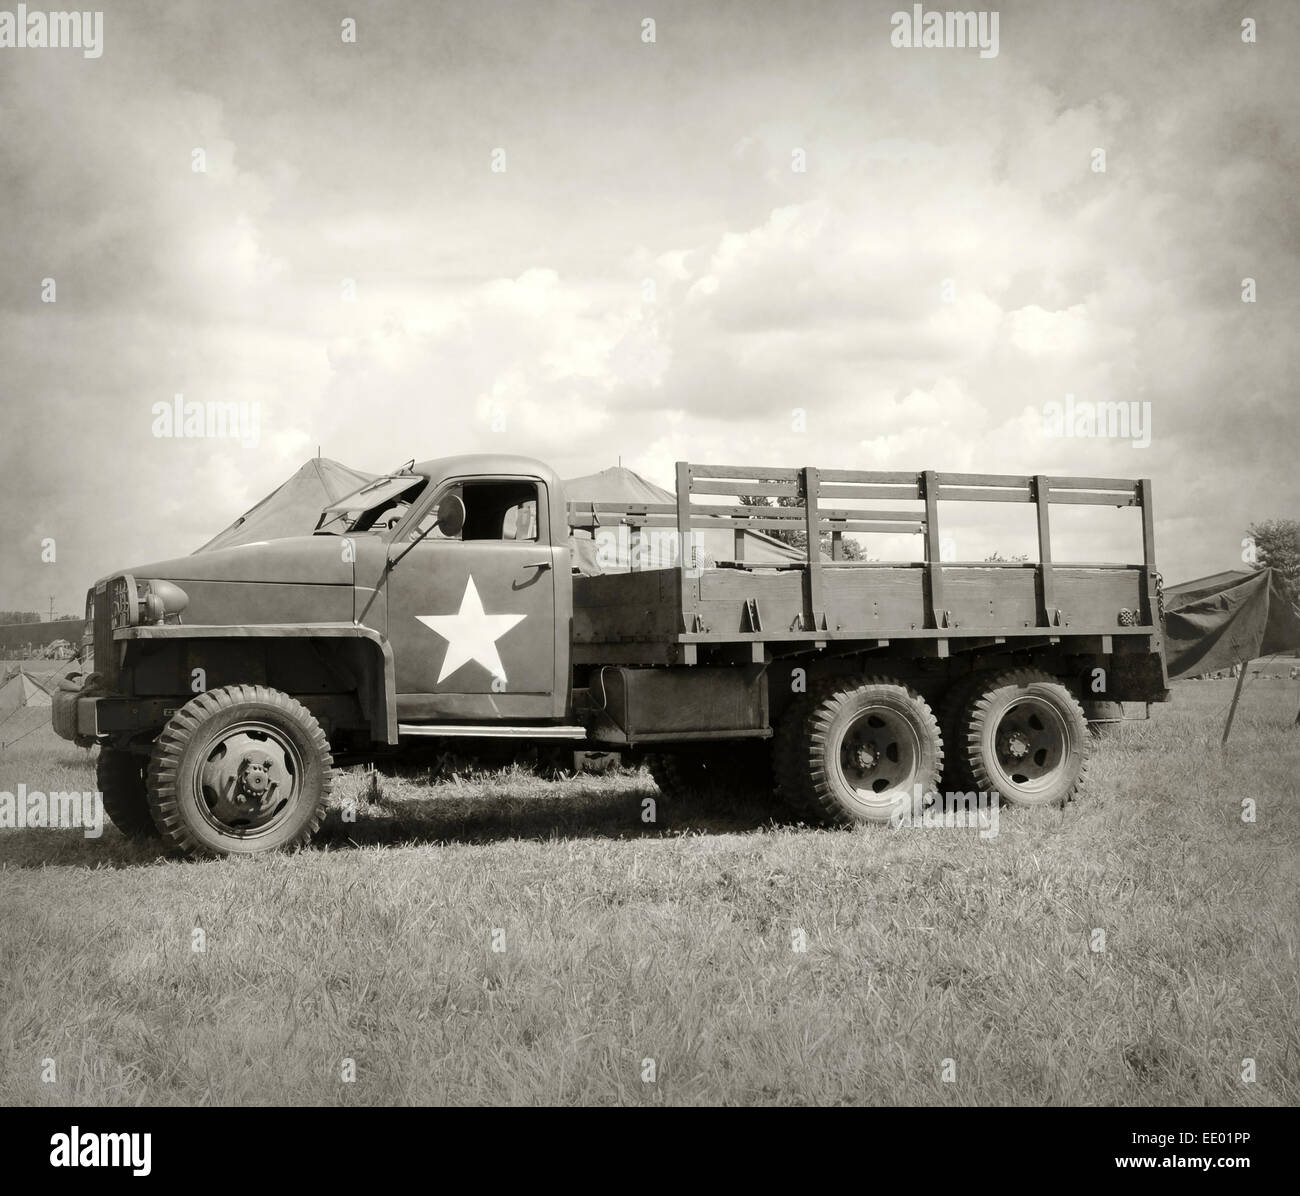 World War II era military truck at a camp Stock Photo